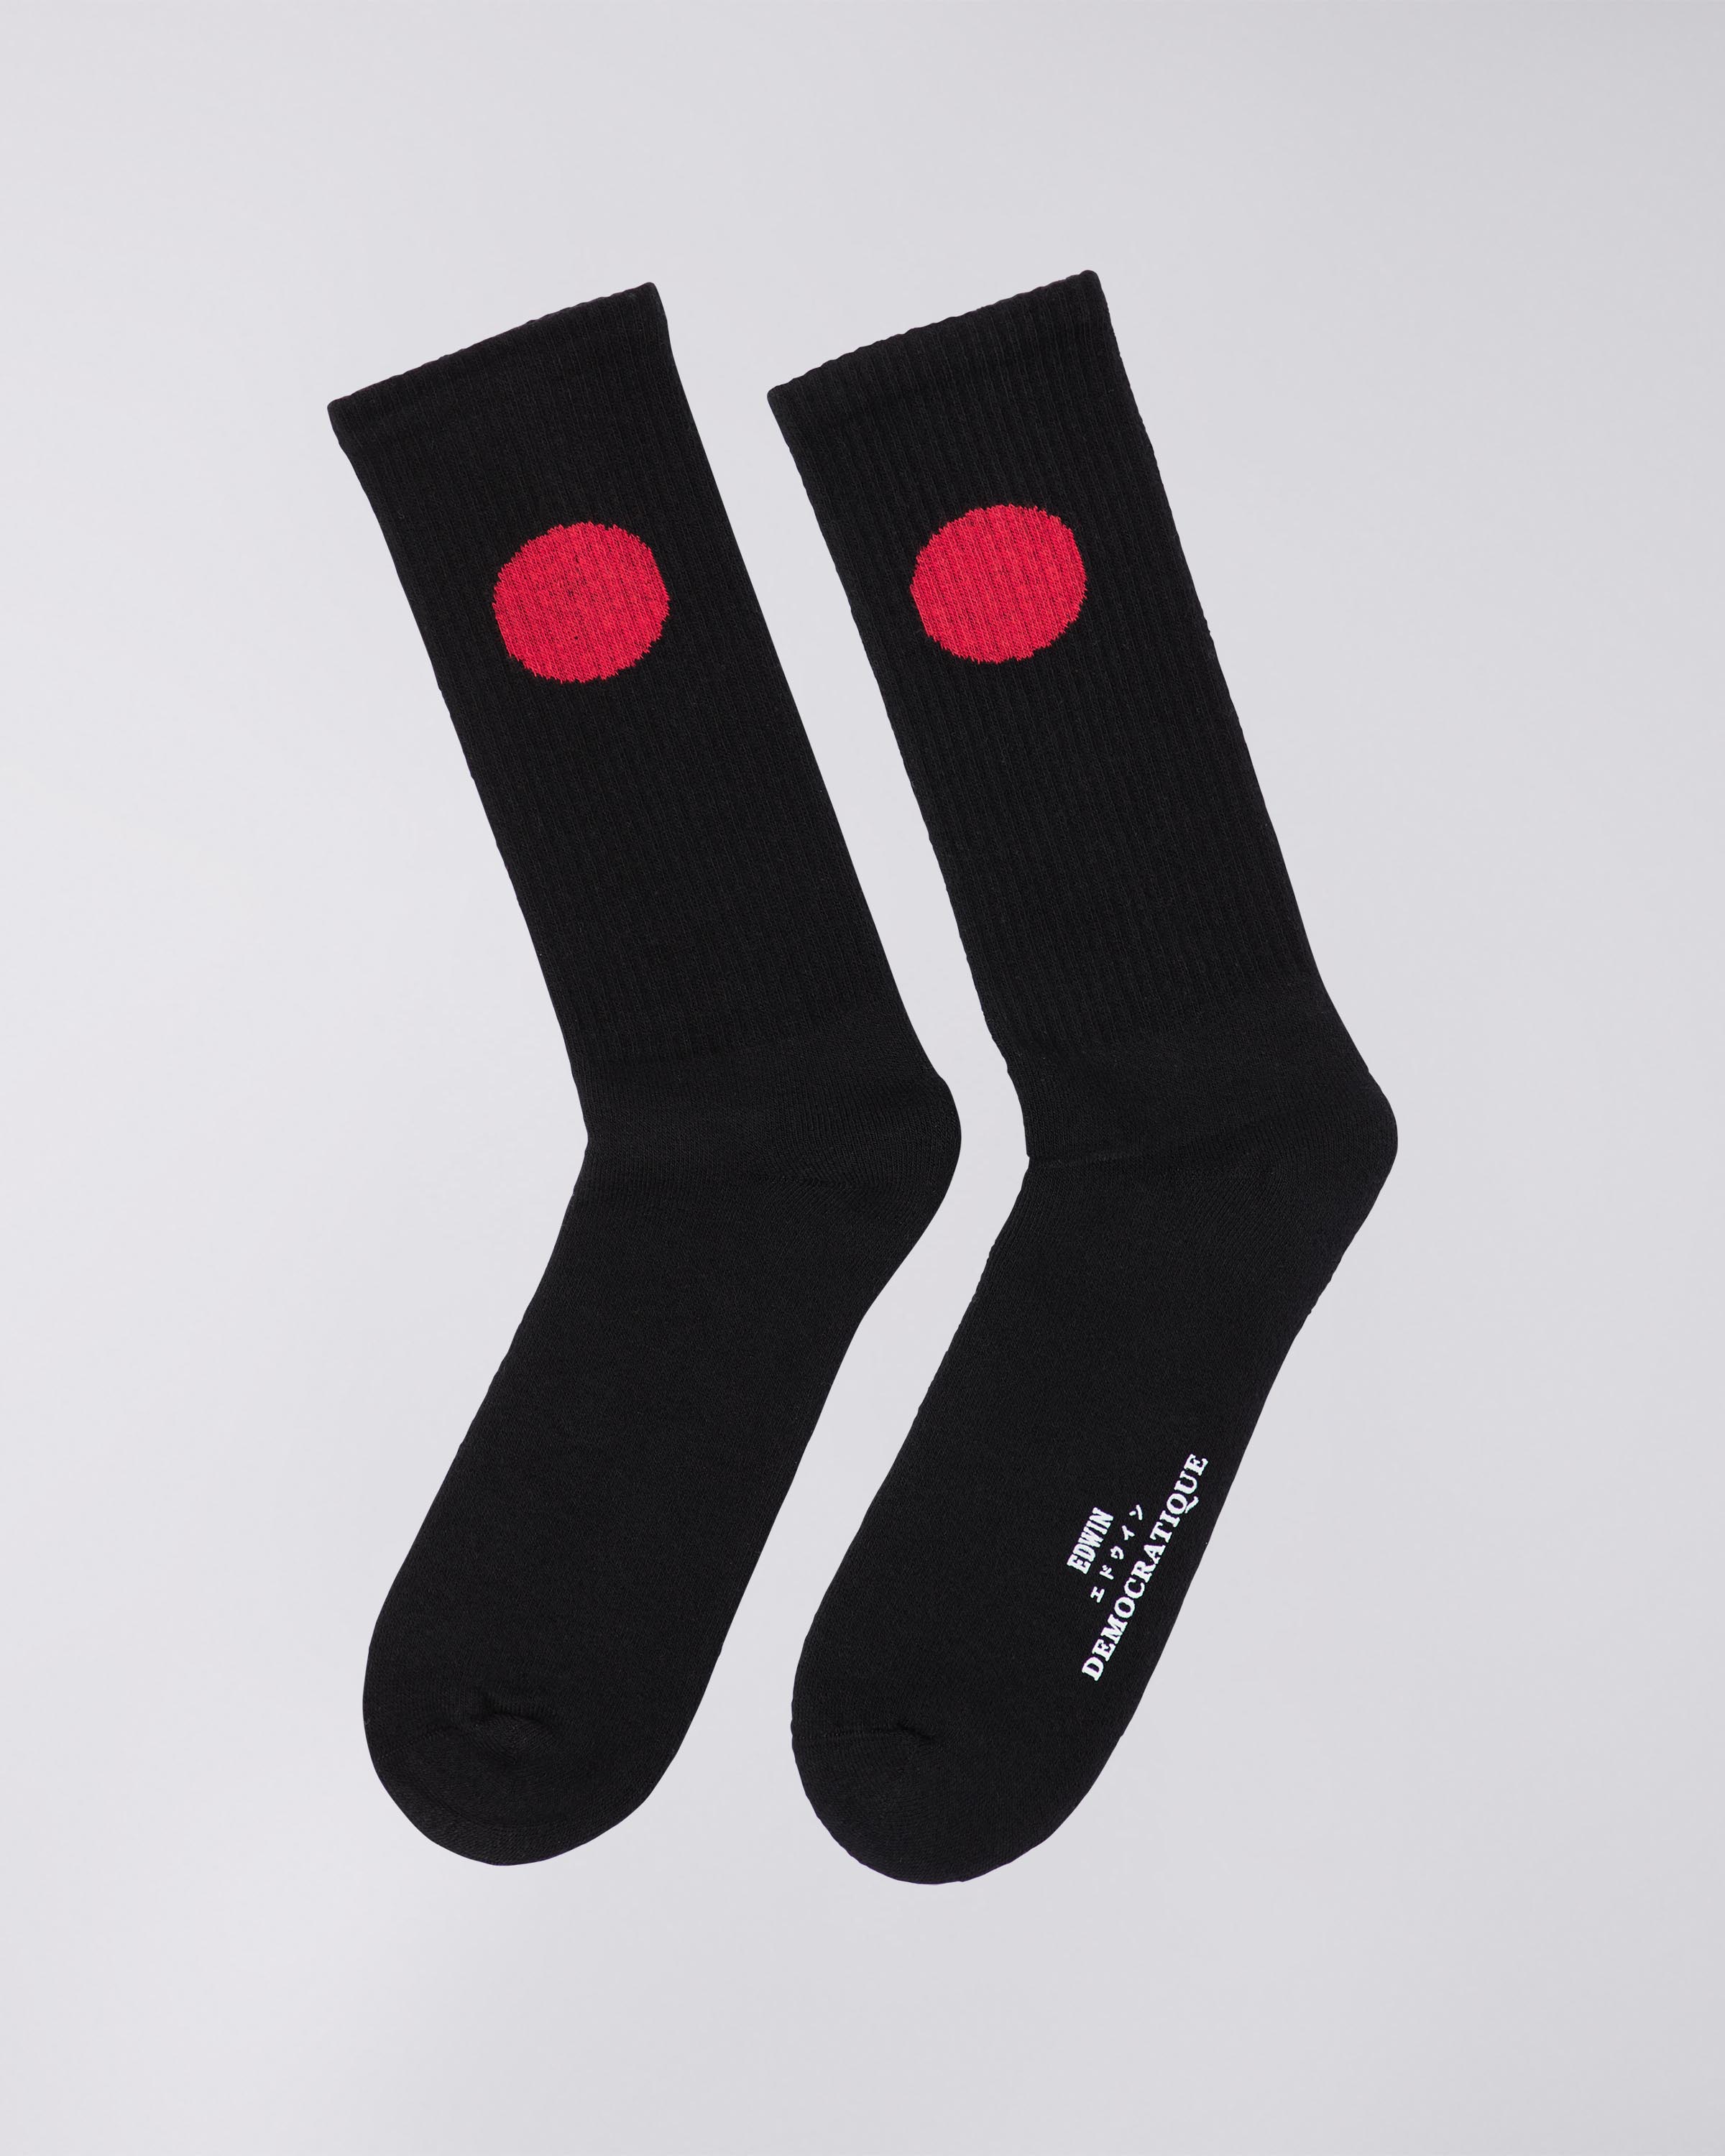 Japanese Sun Socks X Democratique